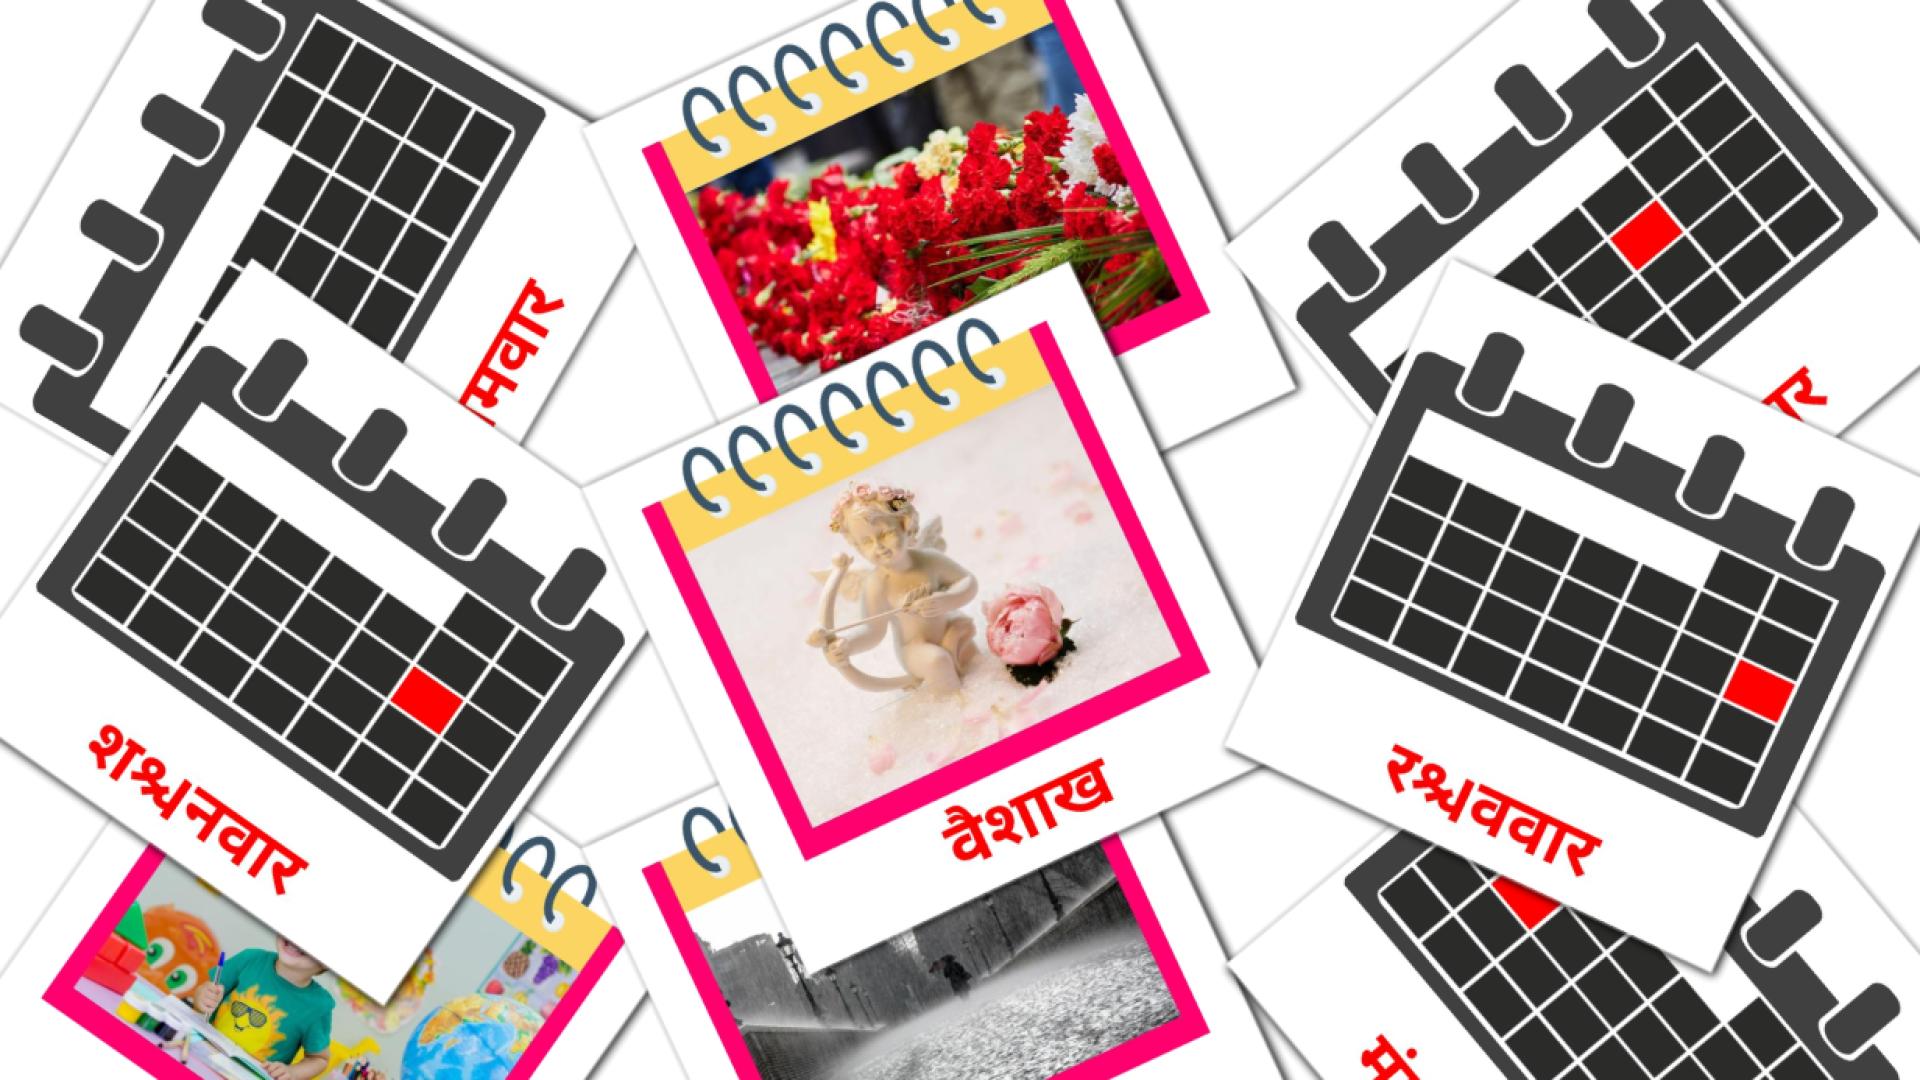  पंचांग hindi woordenschat flashcards